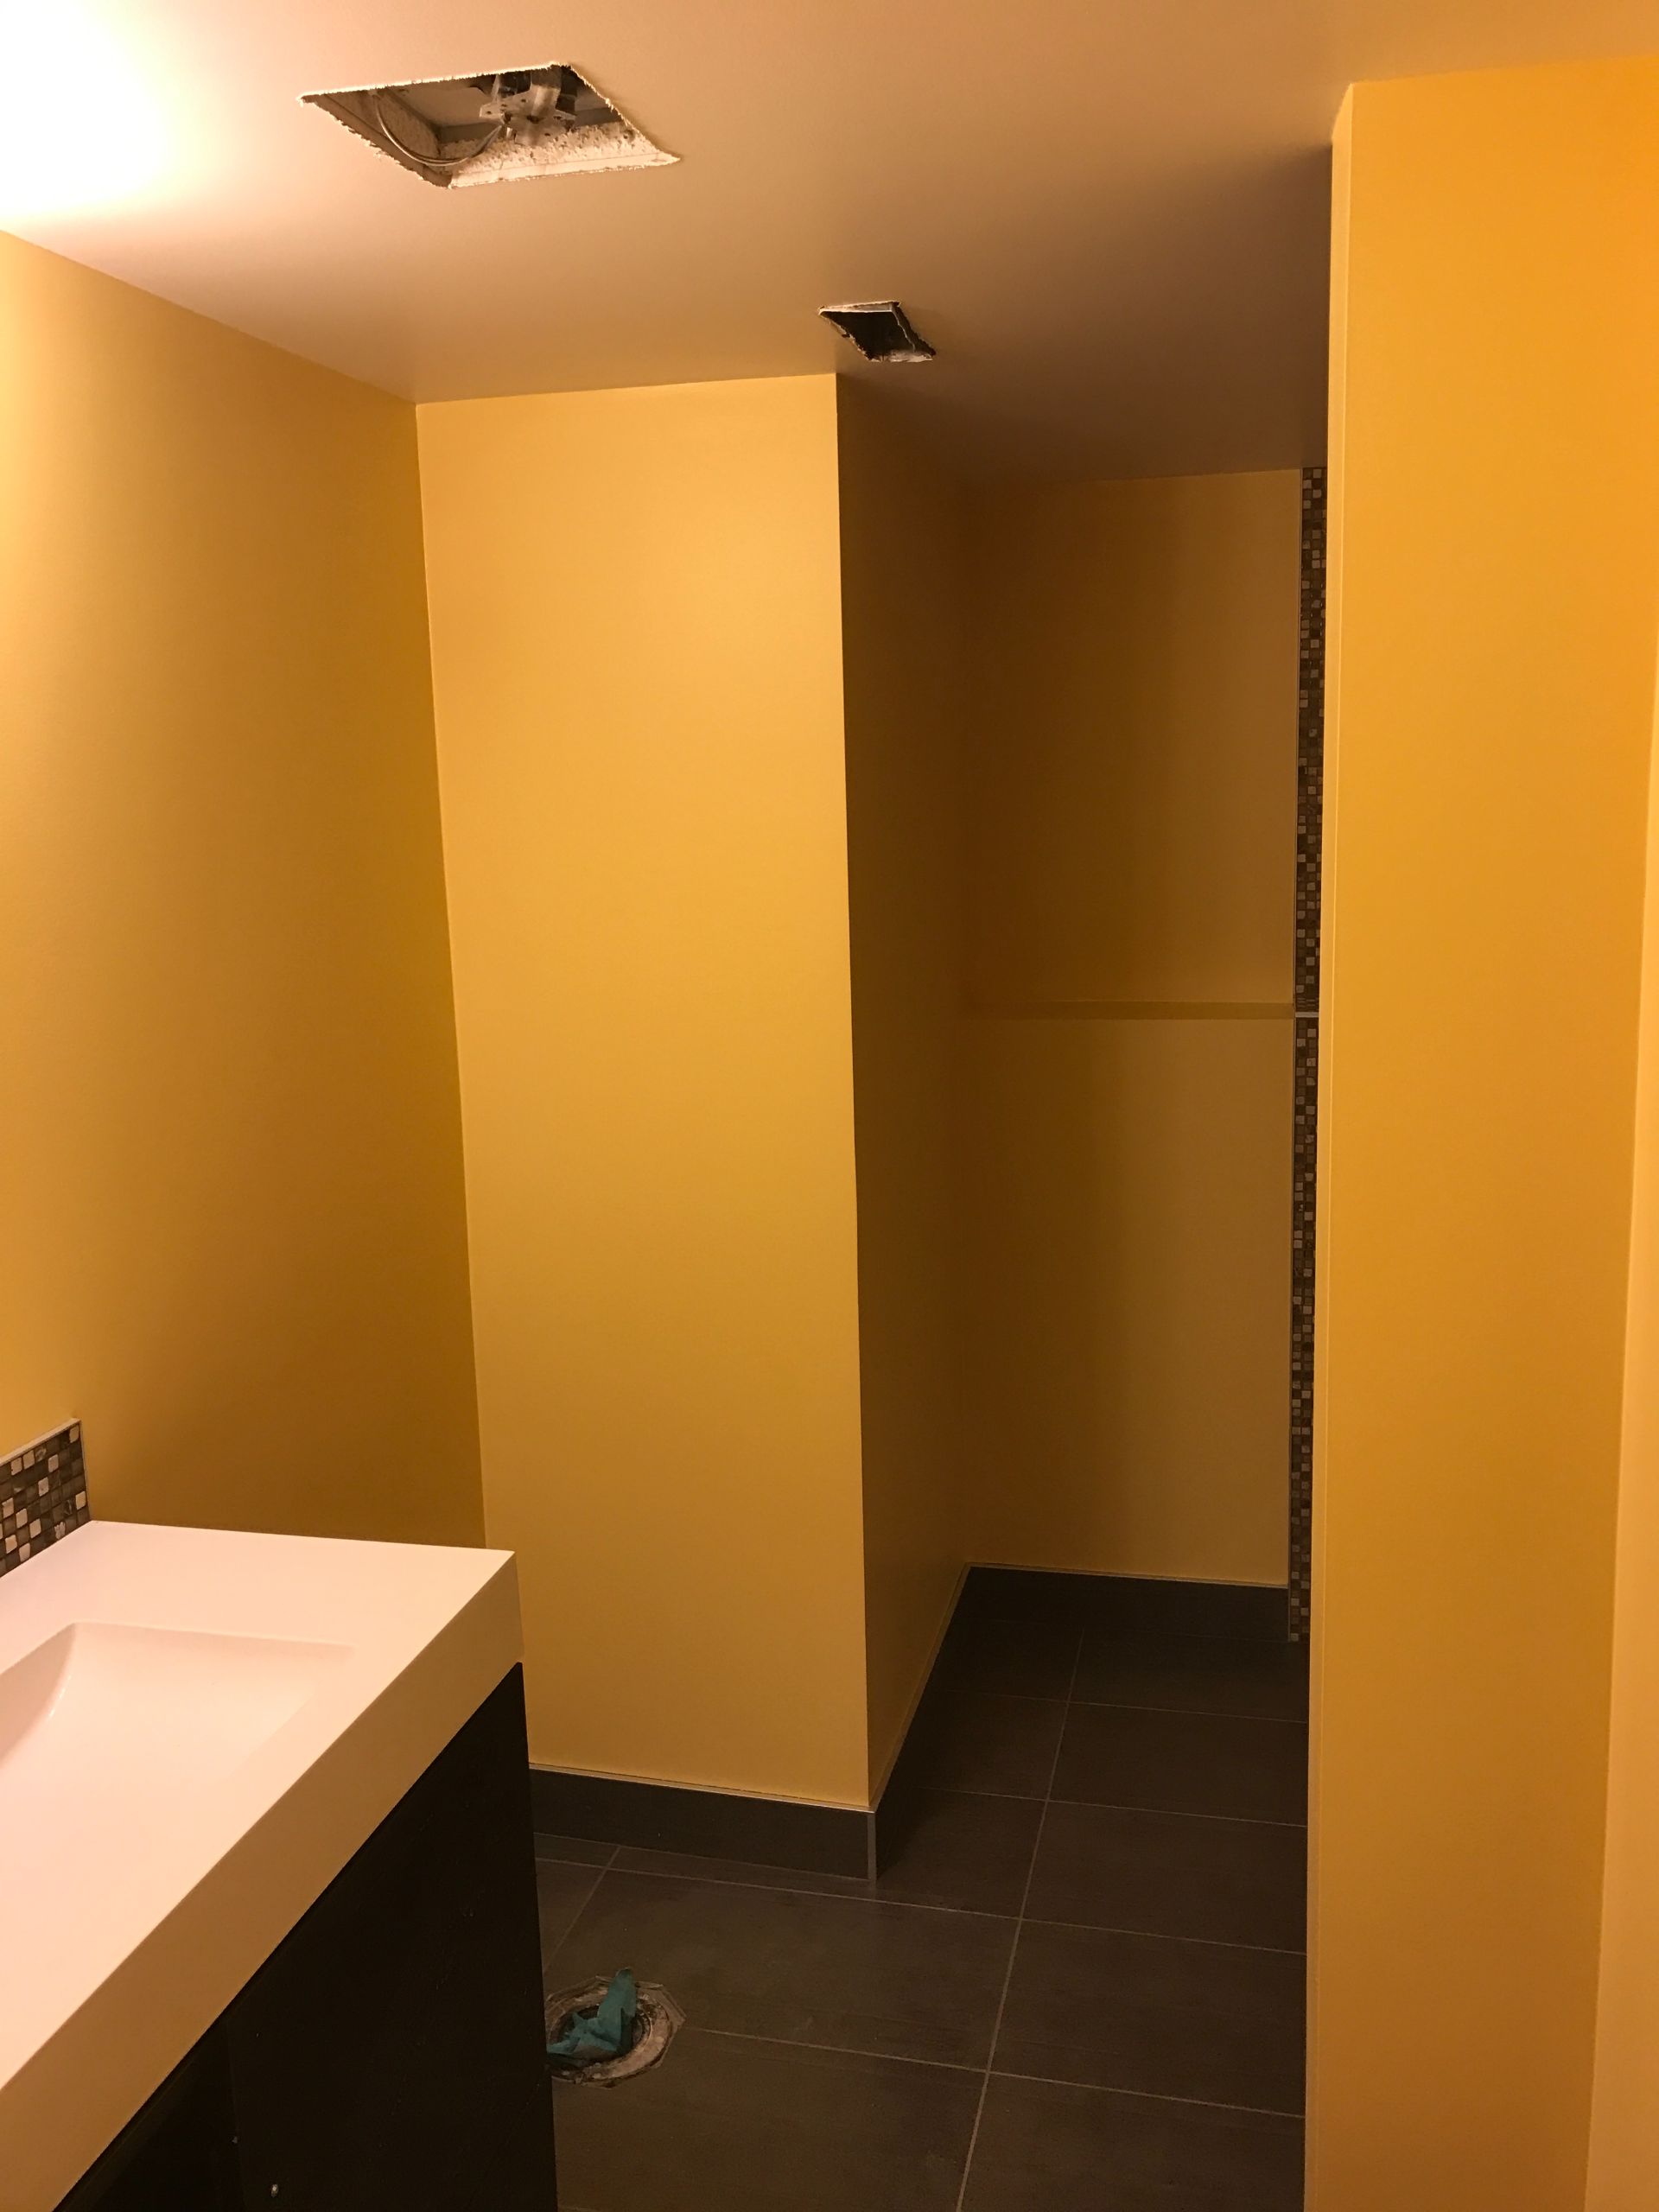 Yellow bathroom walls after